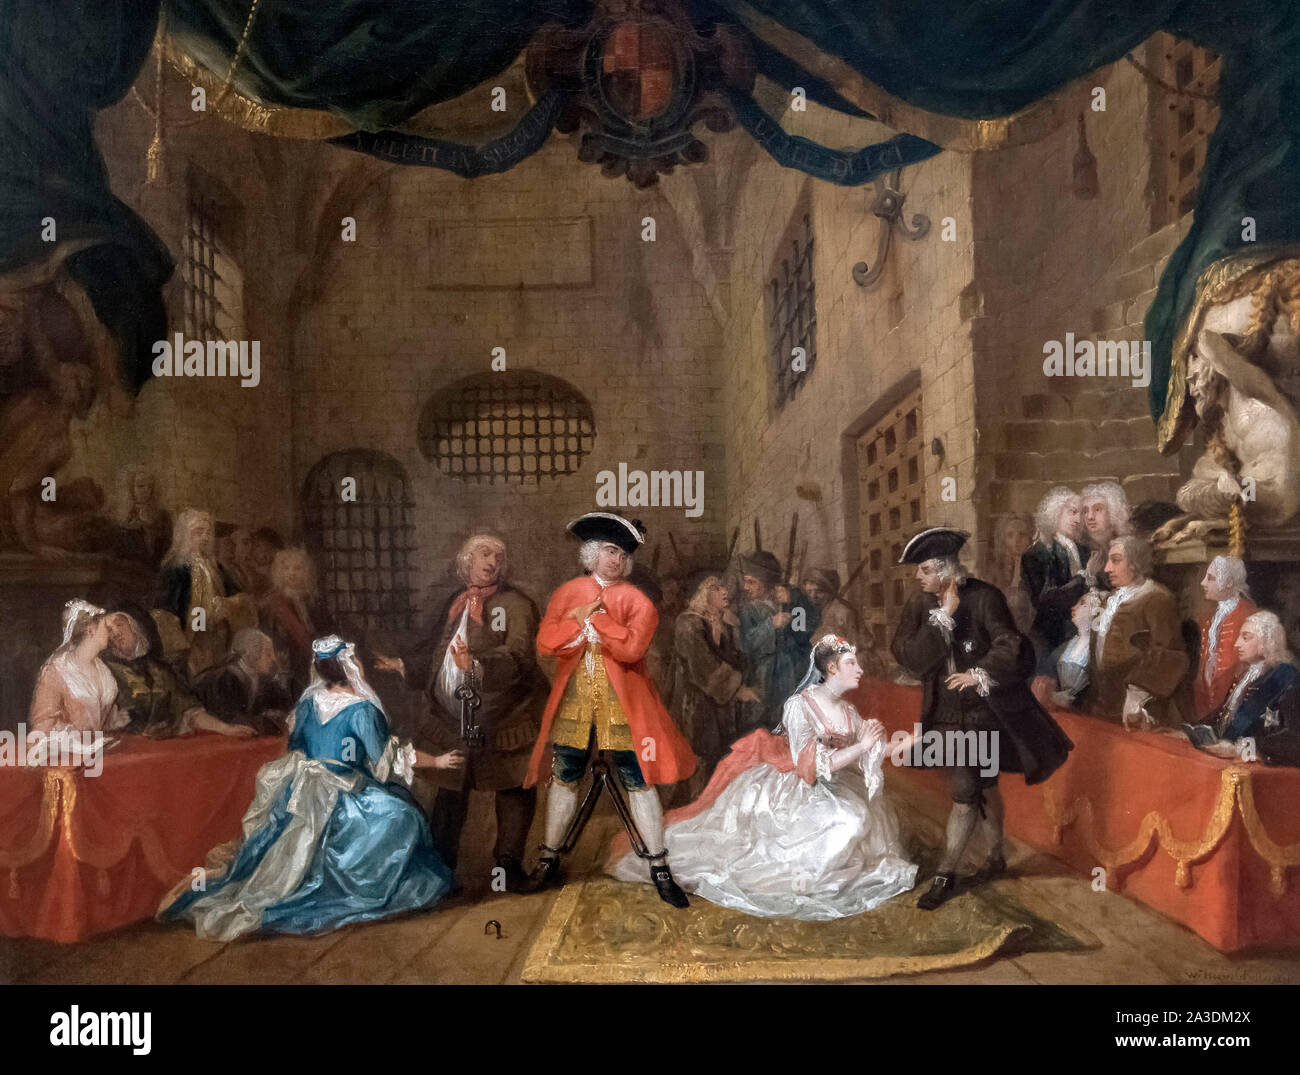 'Beggar's Opera' par William Hogarth (1697-1764), huile sur toile, 1729 Banque D'Images